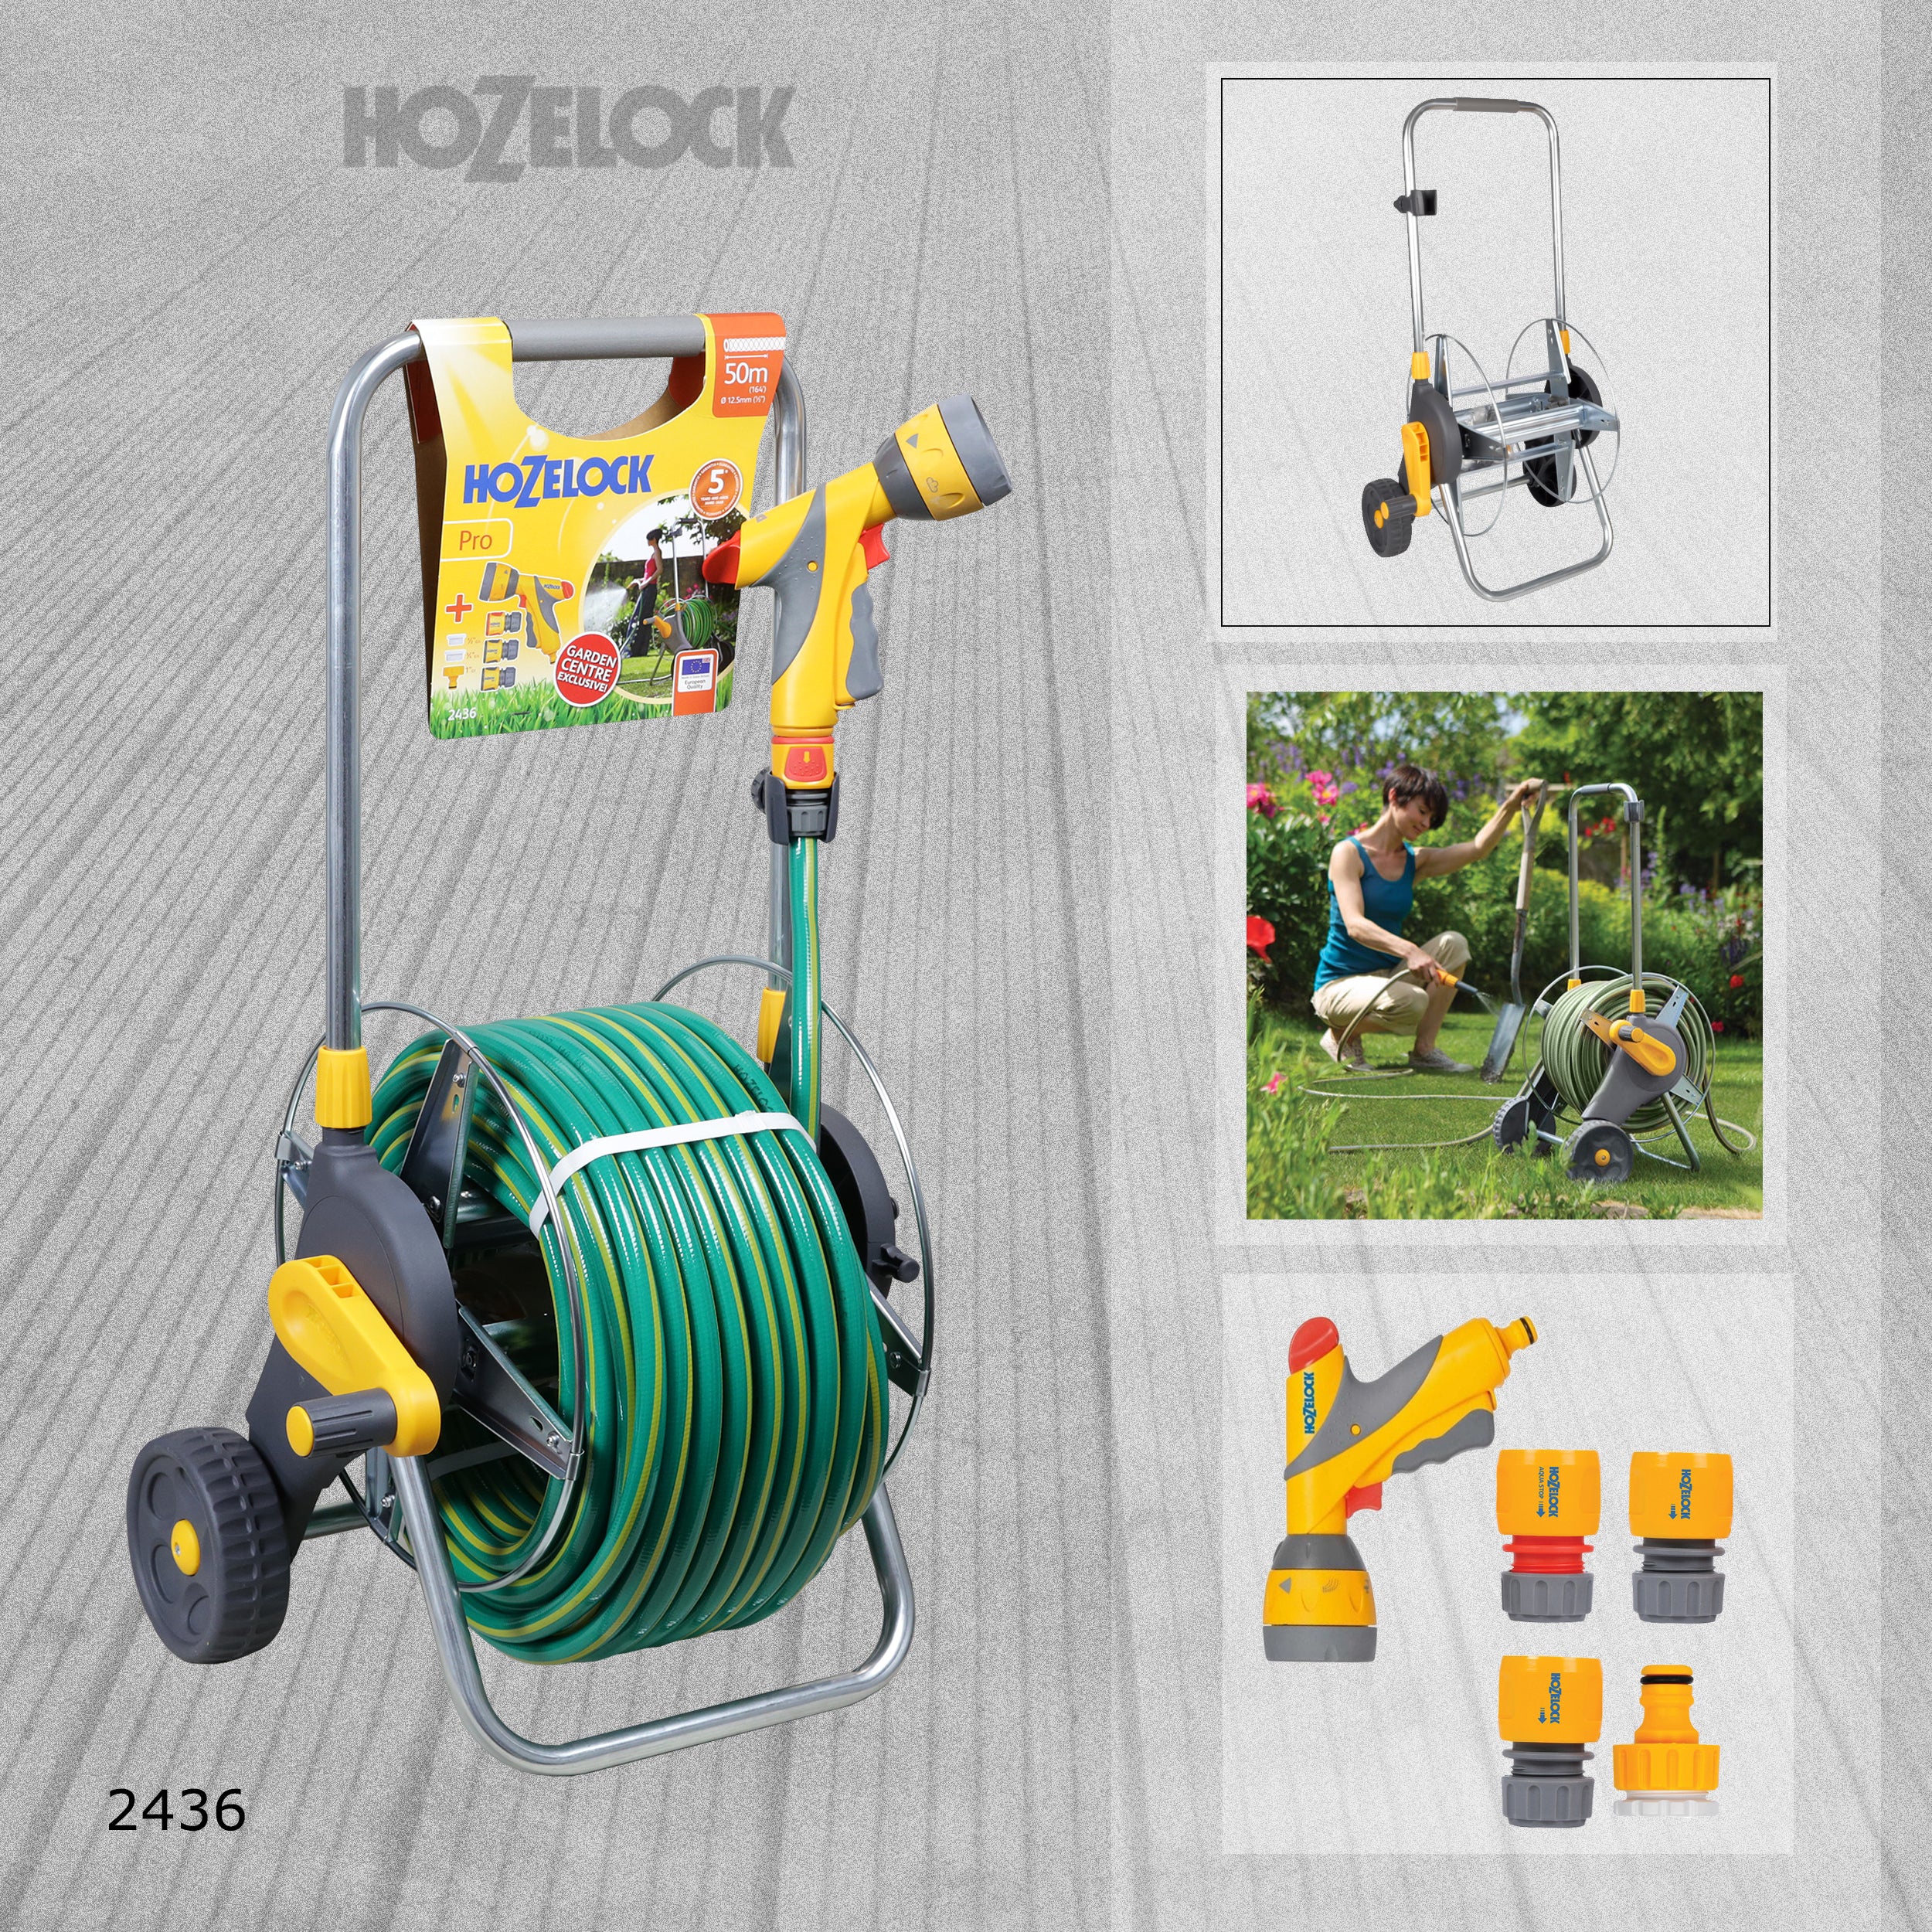 Hozelock Assembled Hose Cart with 30m Hose £39.99